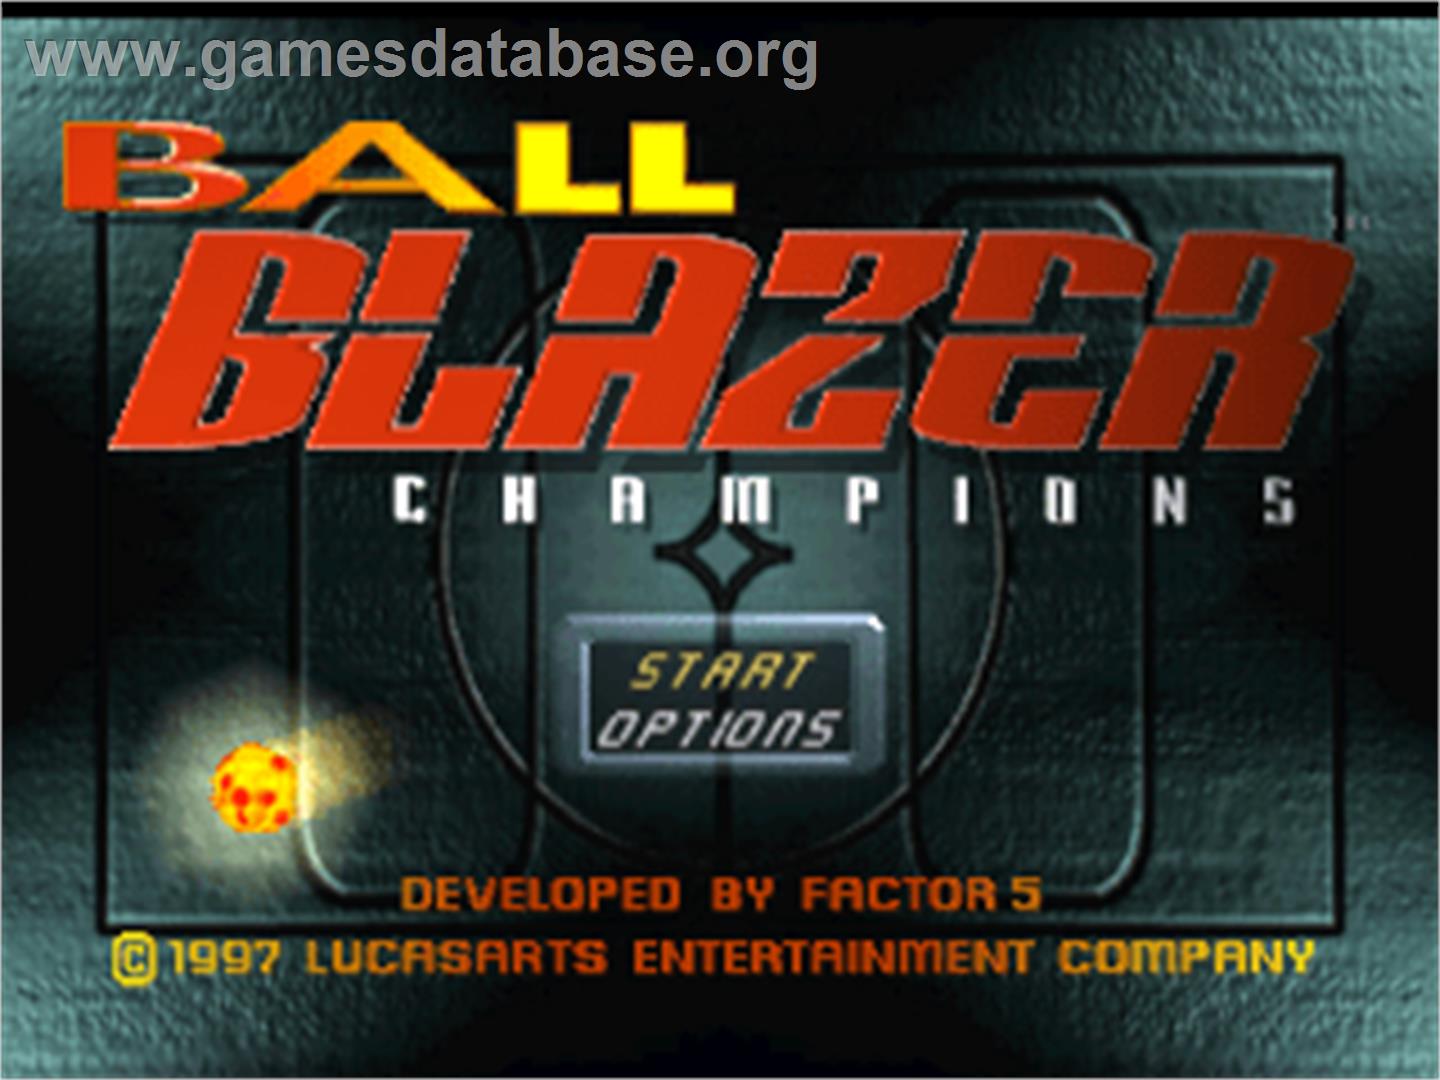 Ballblazer Champions - Sony Playstation - Artwork - Title Screen